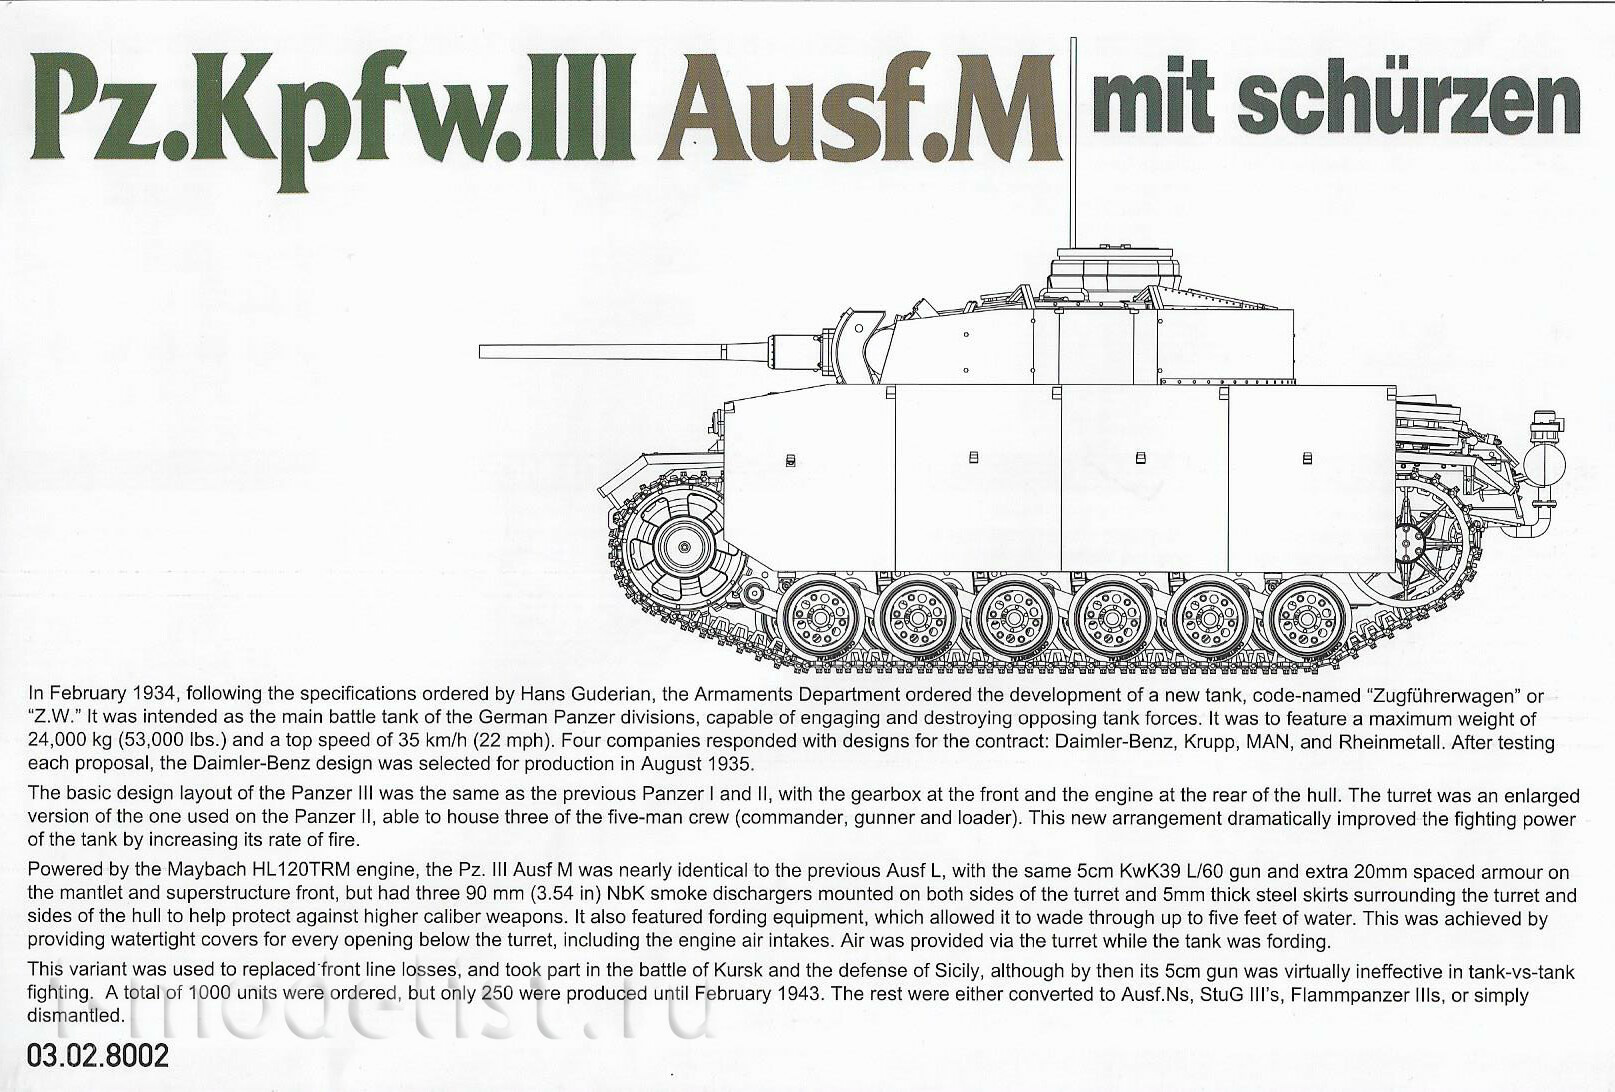 8002 Takom 1/35 Pz.Kpfw.III Ausf.M mit Schürzen